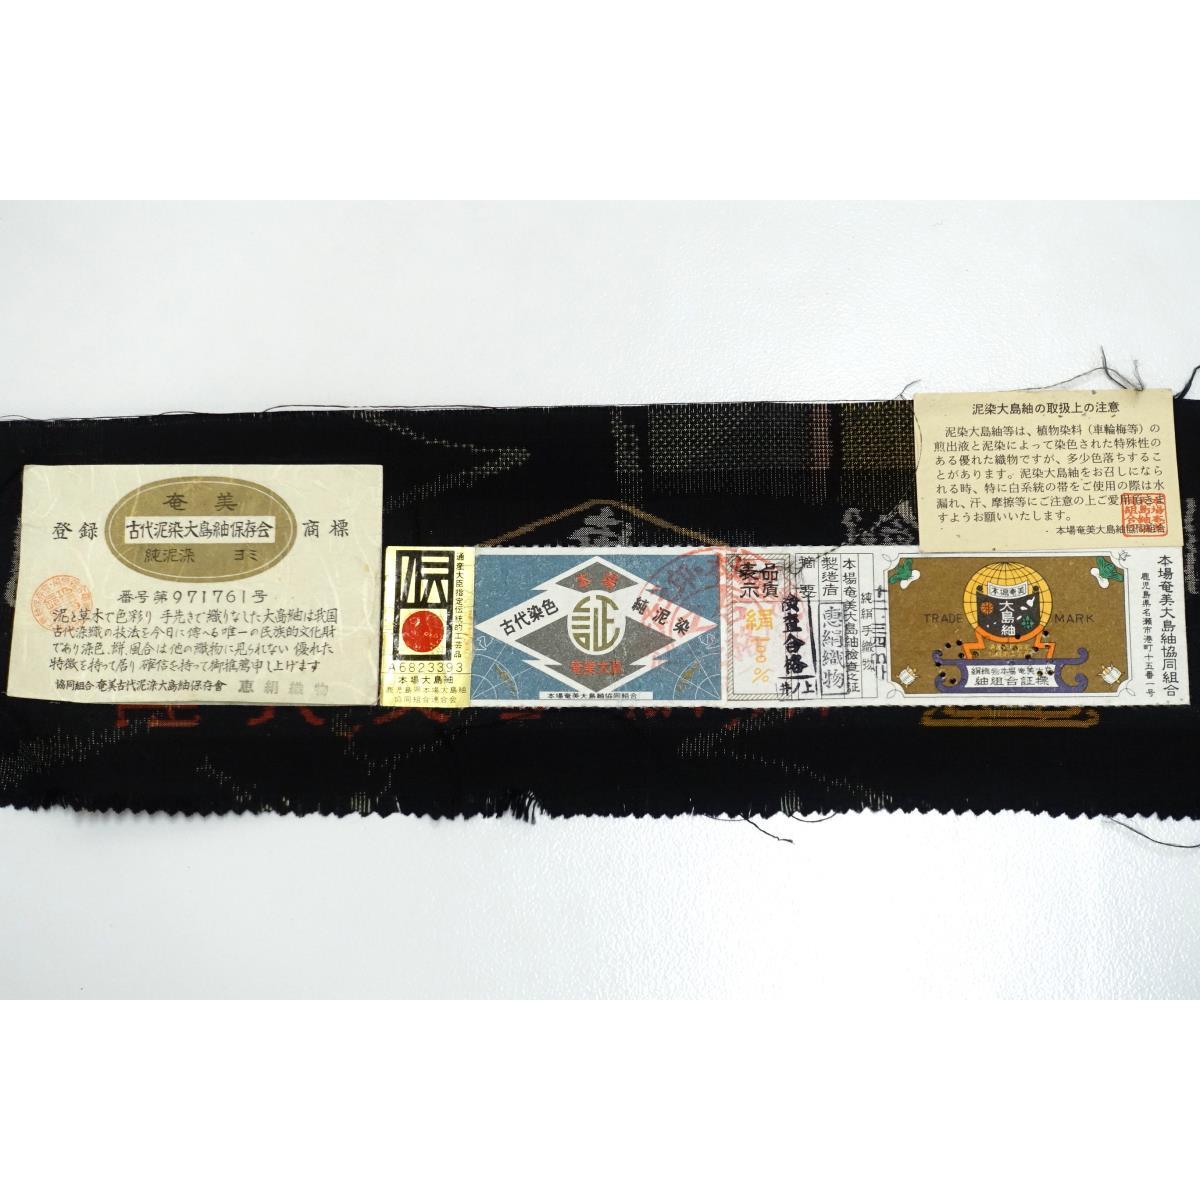 Tsumugi Authentic Amami Ooshima Tsumugi Shichi Maruki with certificate stamp